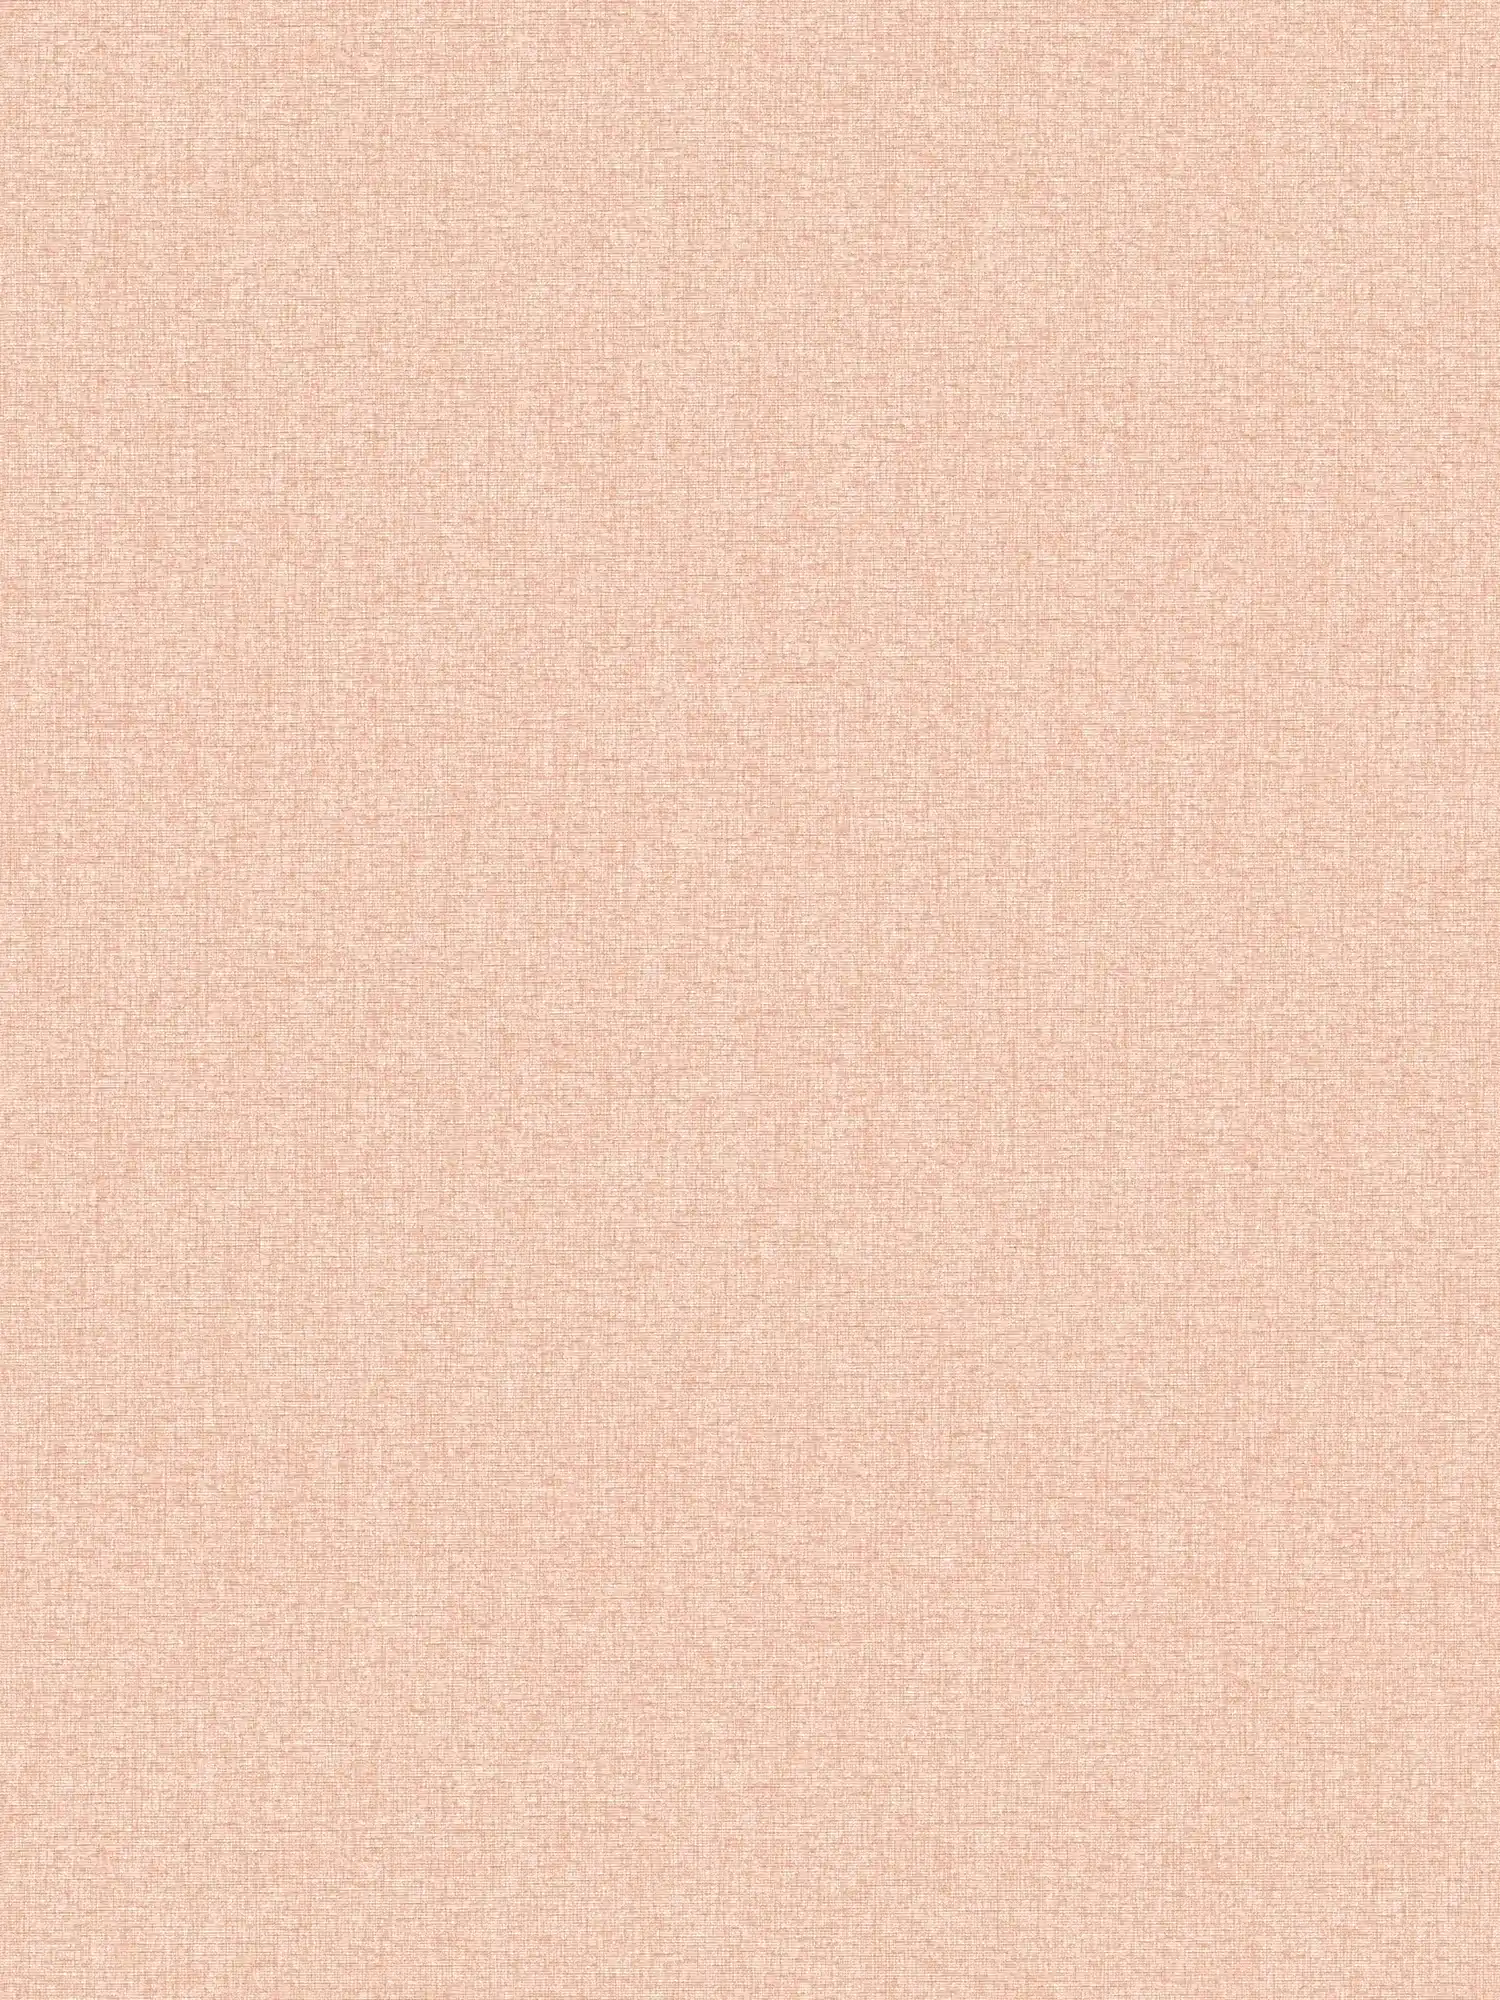 Papel pintado no tejido con diseño texturado liso, mate - naranja, rosa
